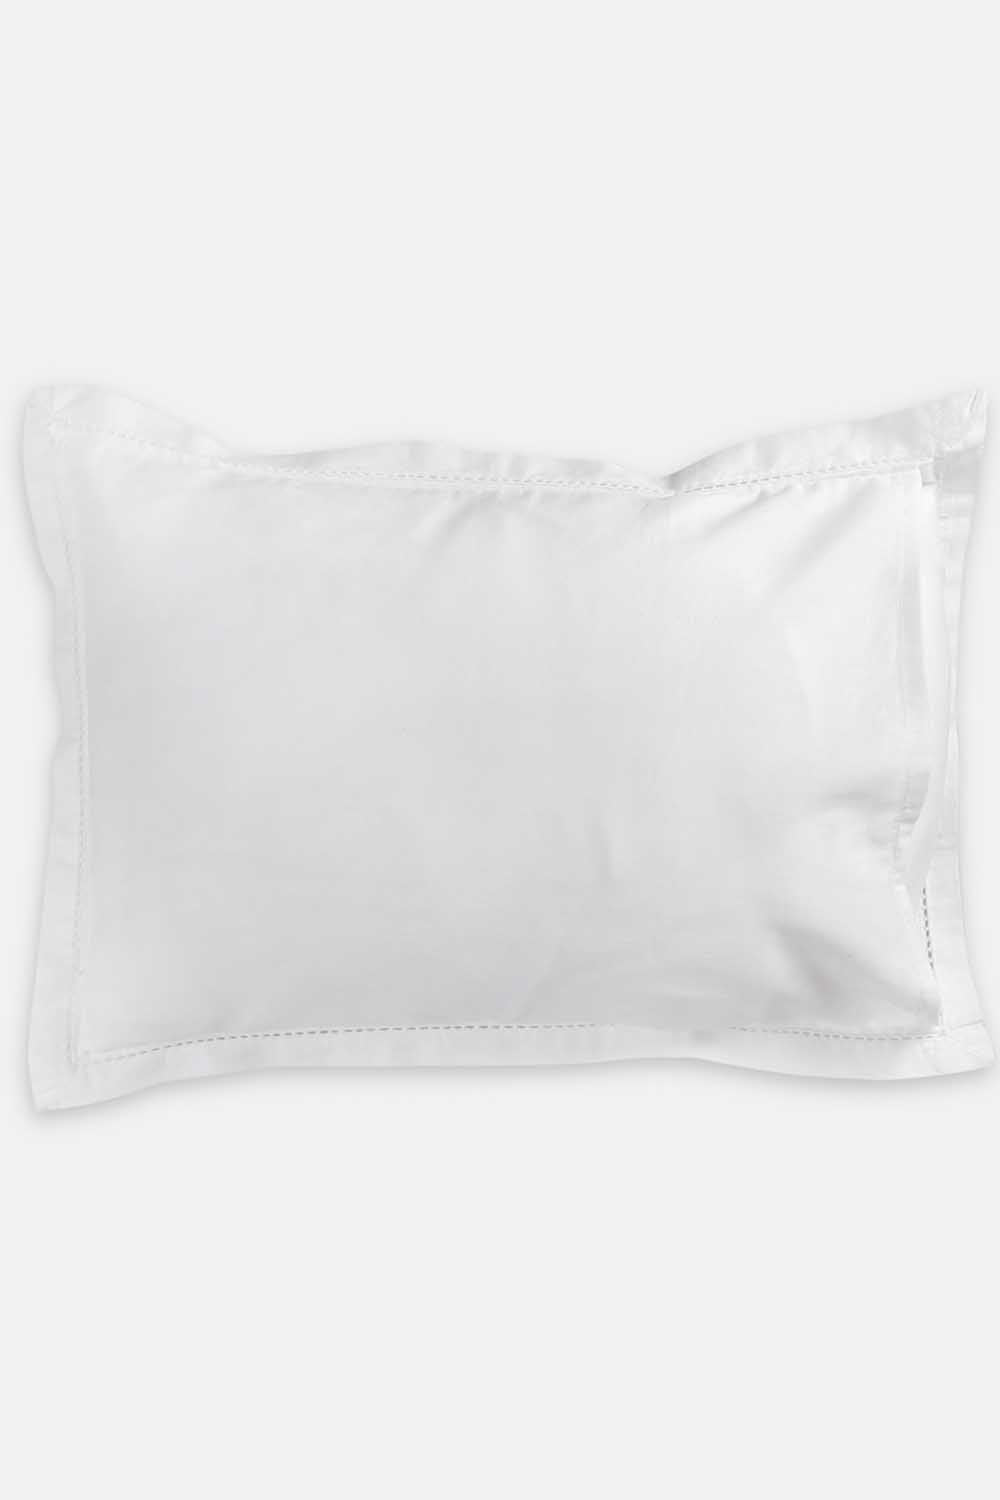 Cow Top Sheet & Pillow Set